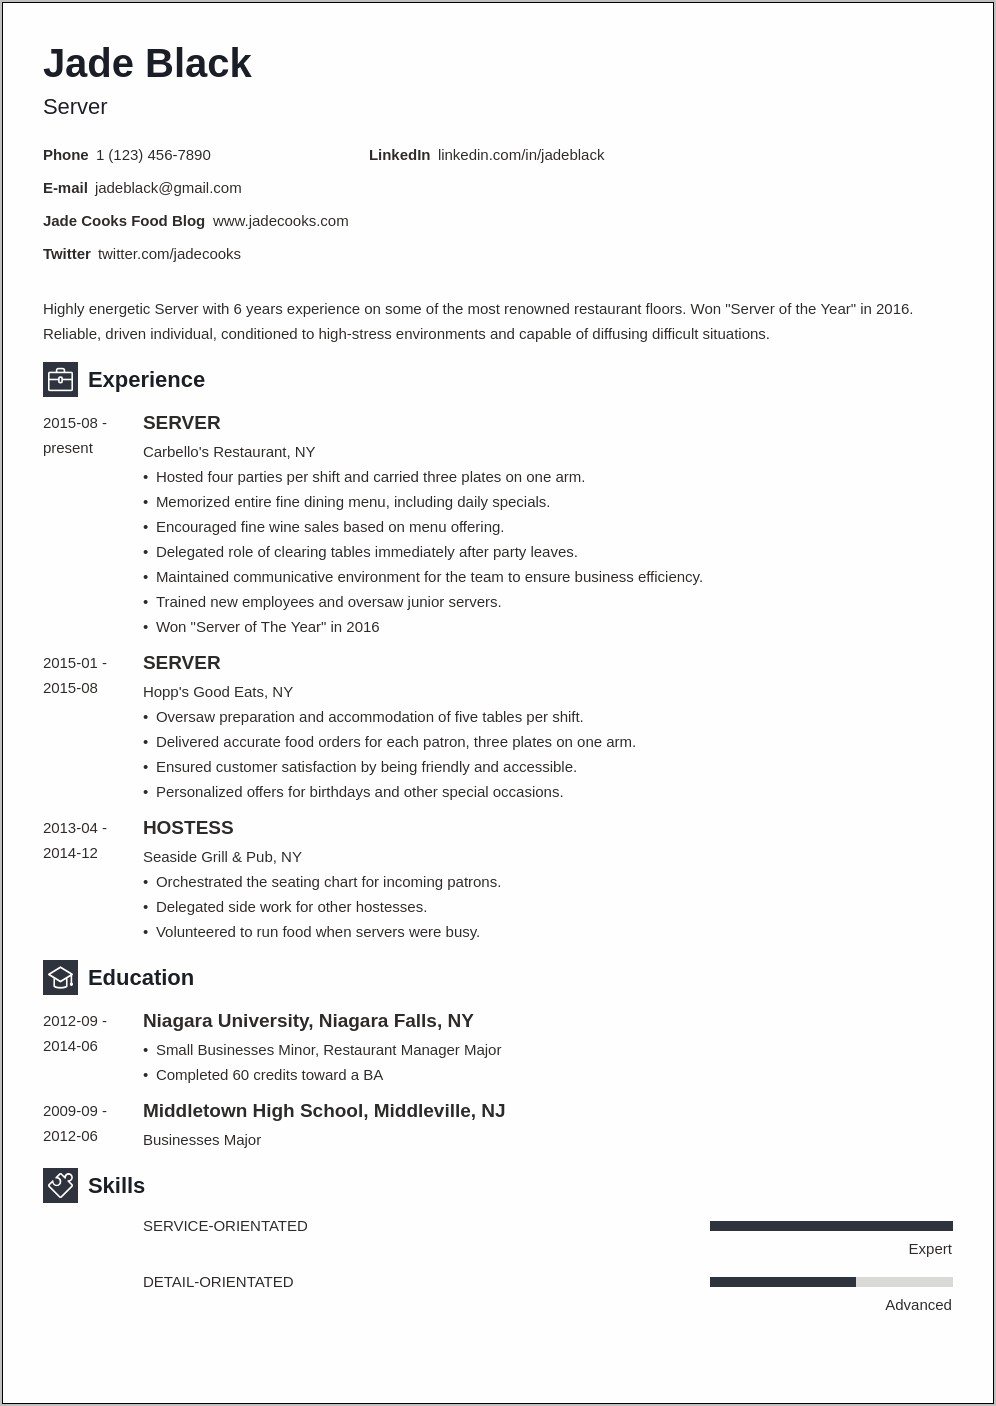 Server Job Description For Resume Reddit